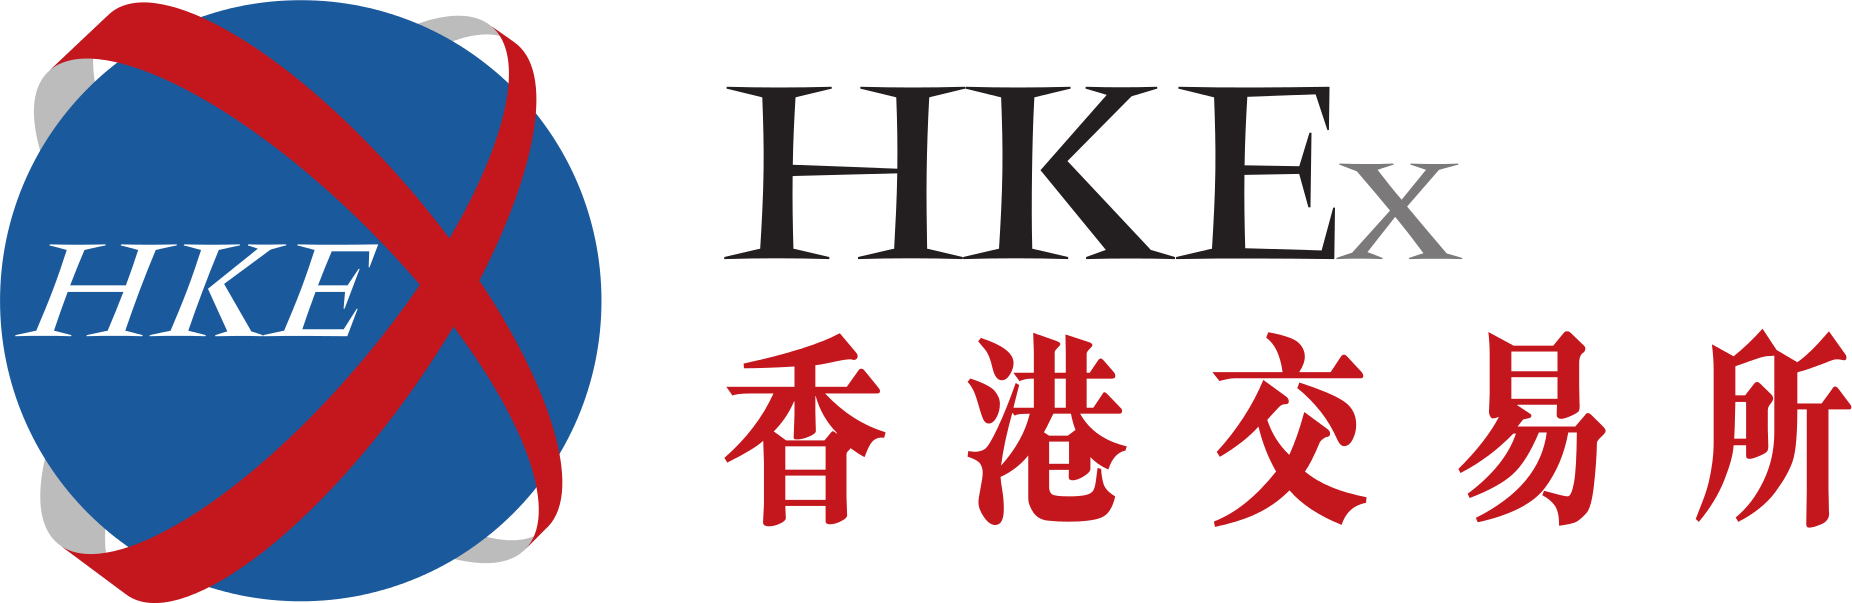 Stock exchange hk HK Stock